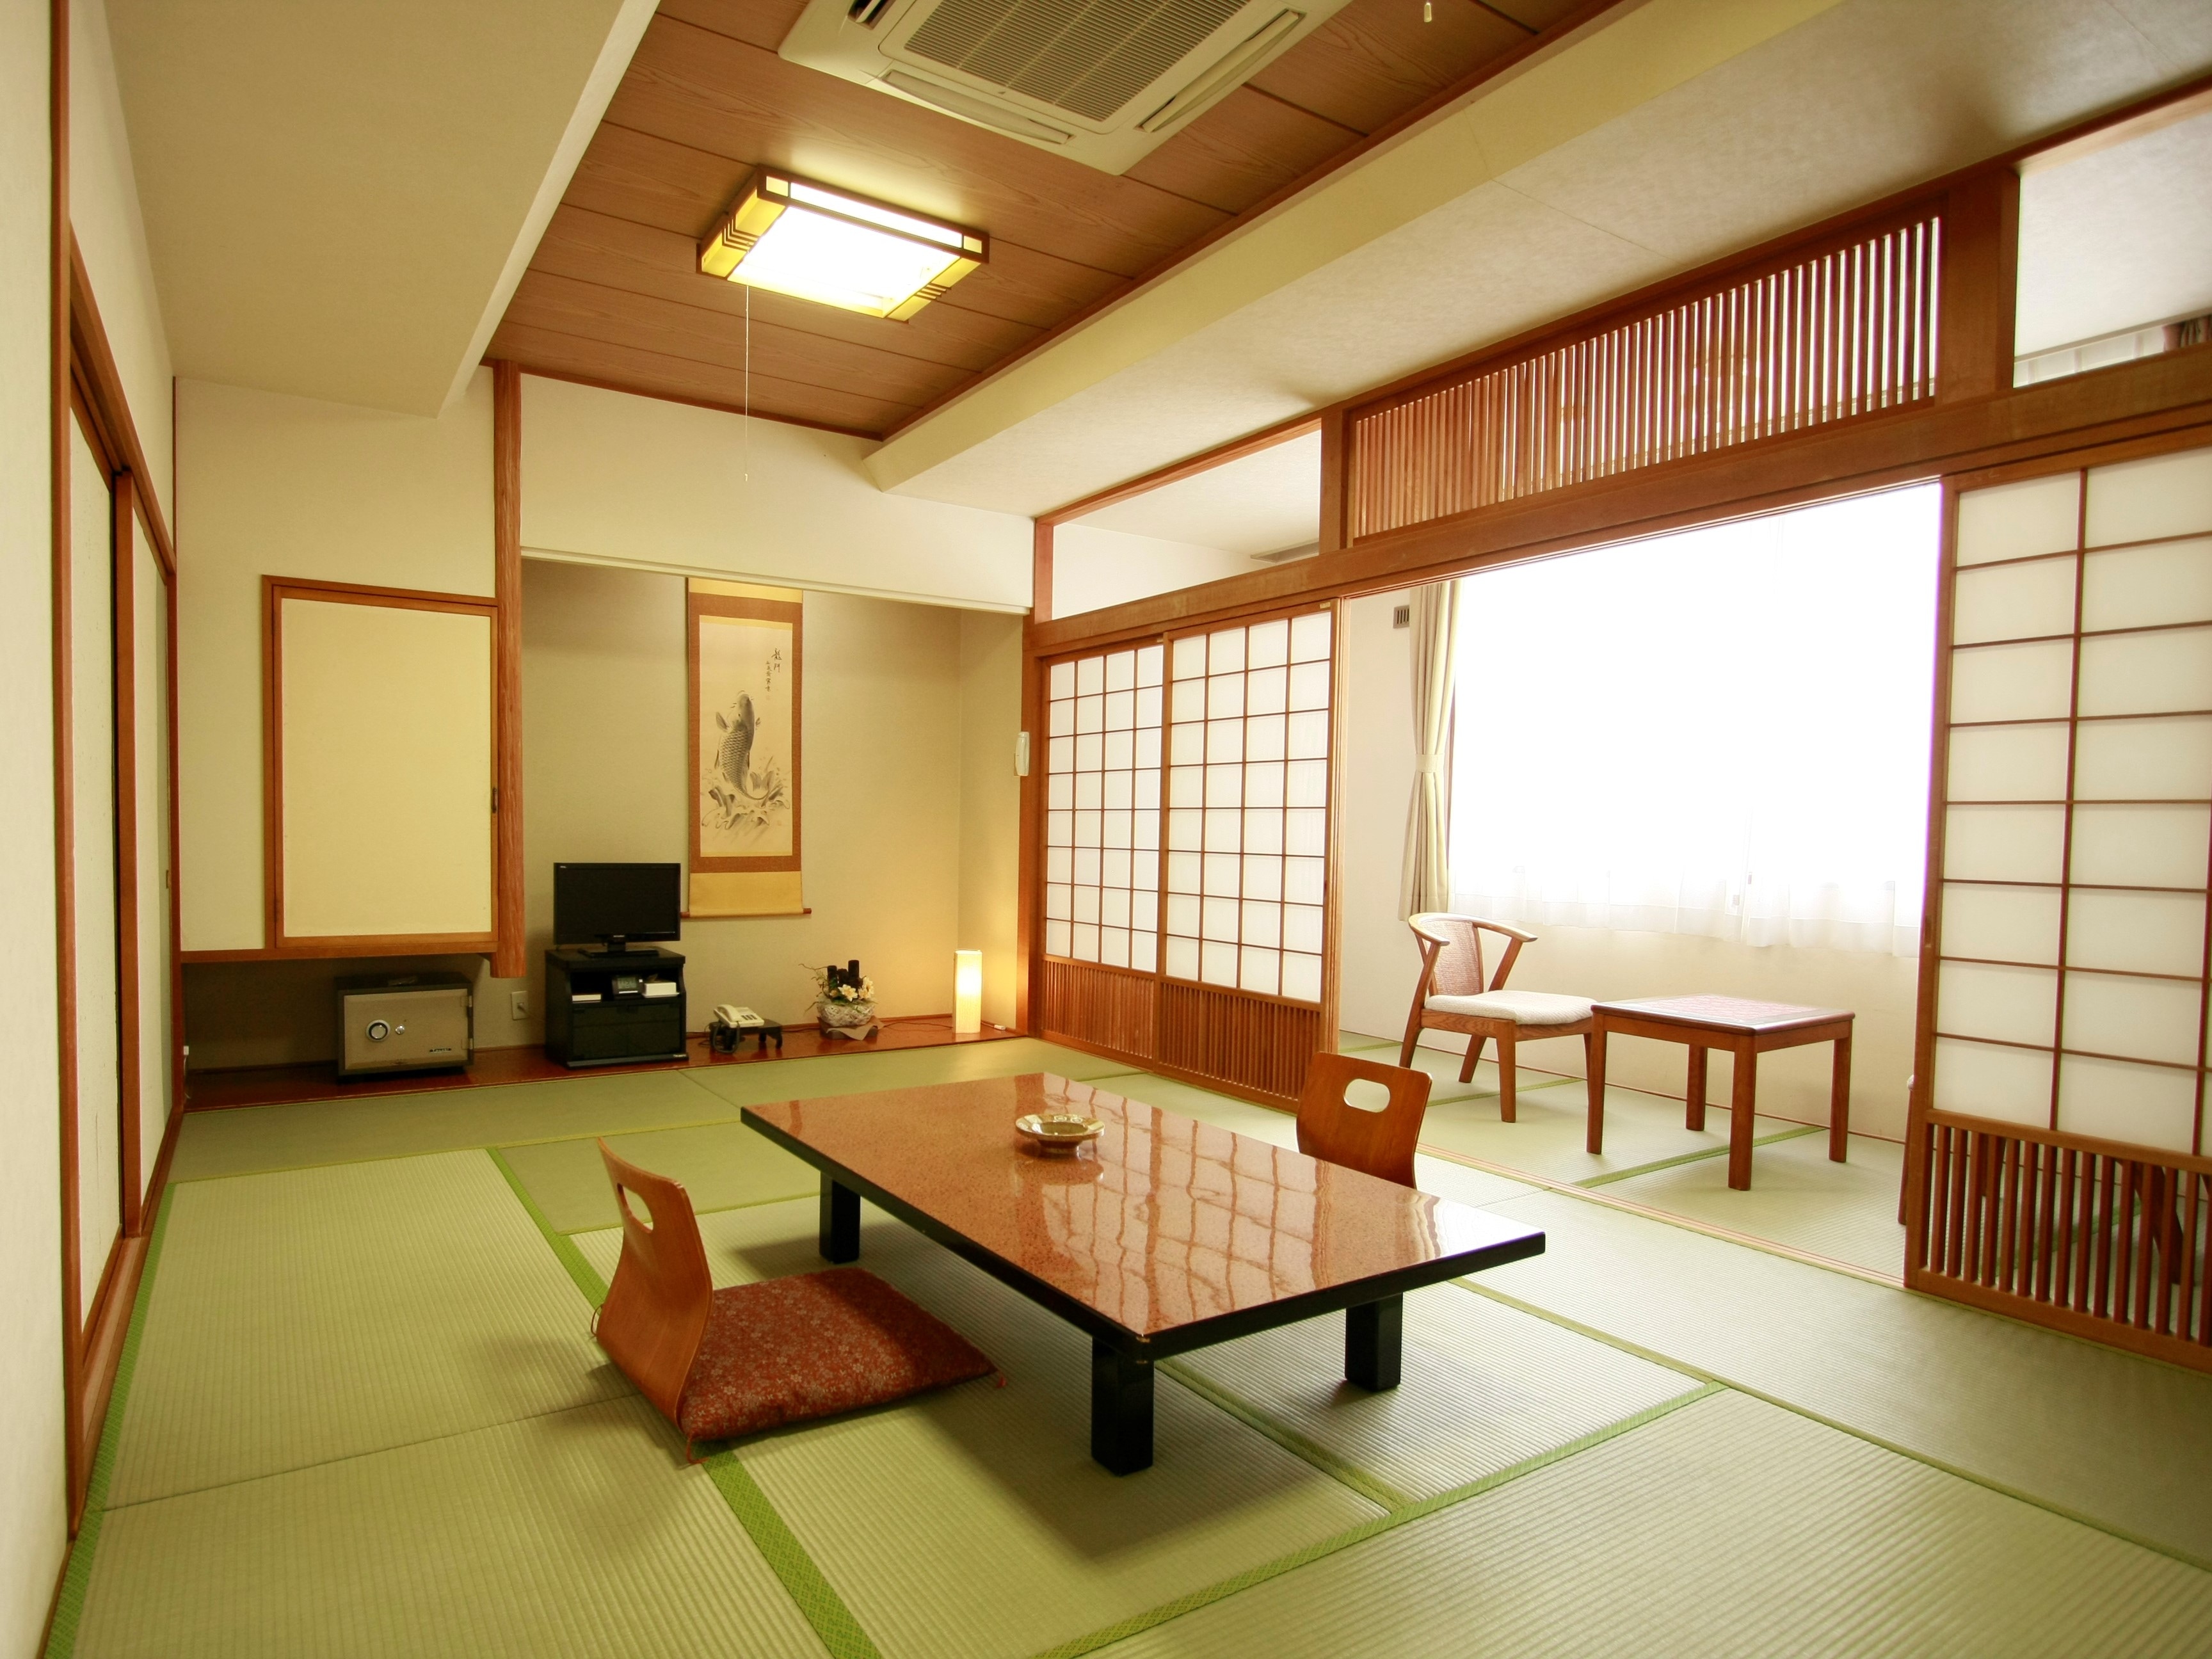 Japanese-style room 12 tatami mats